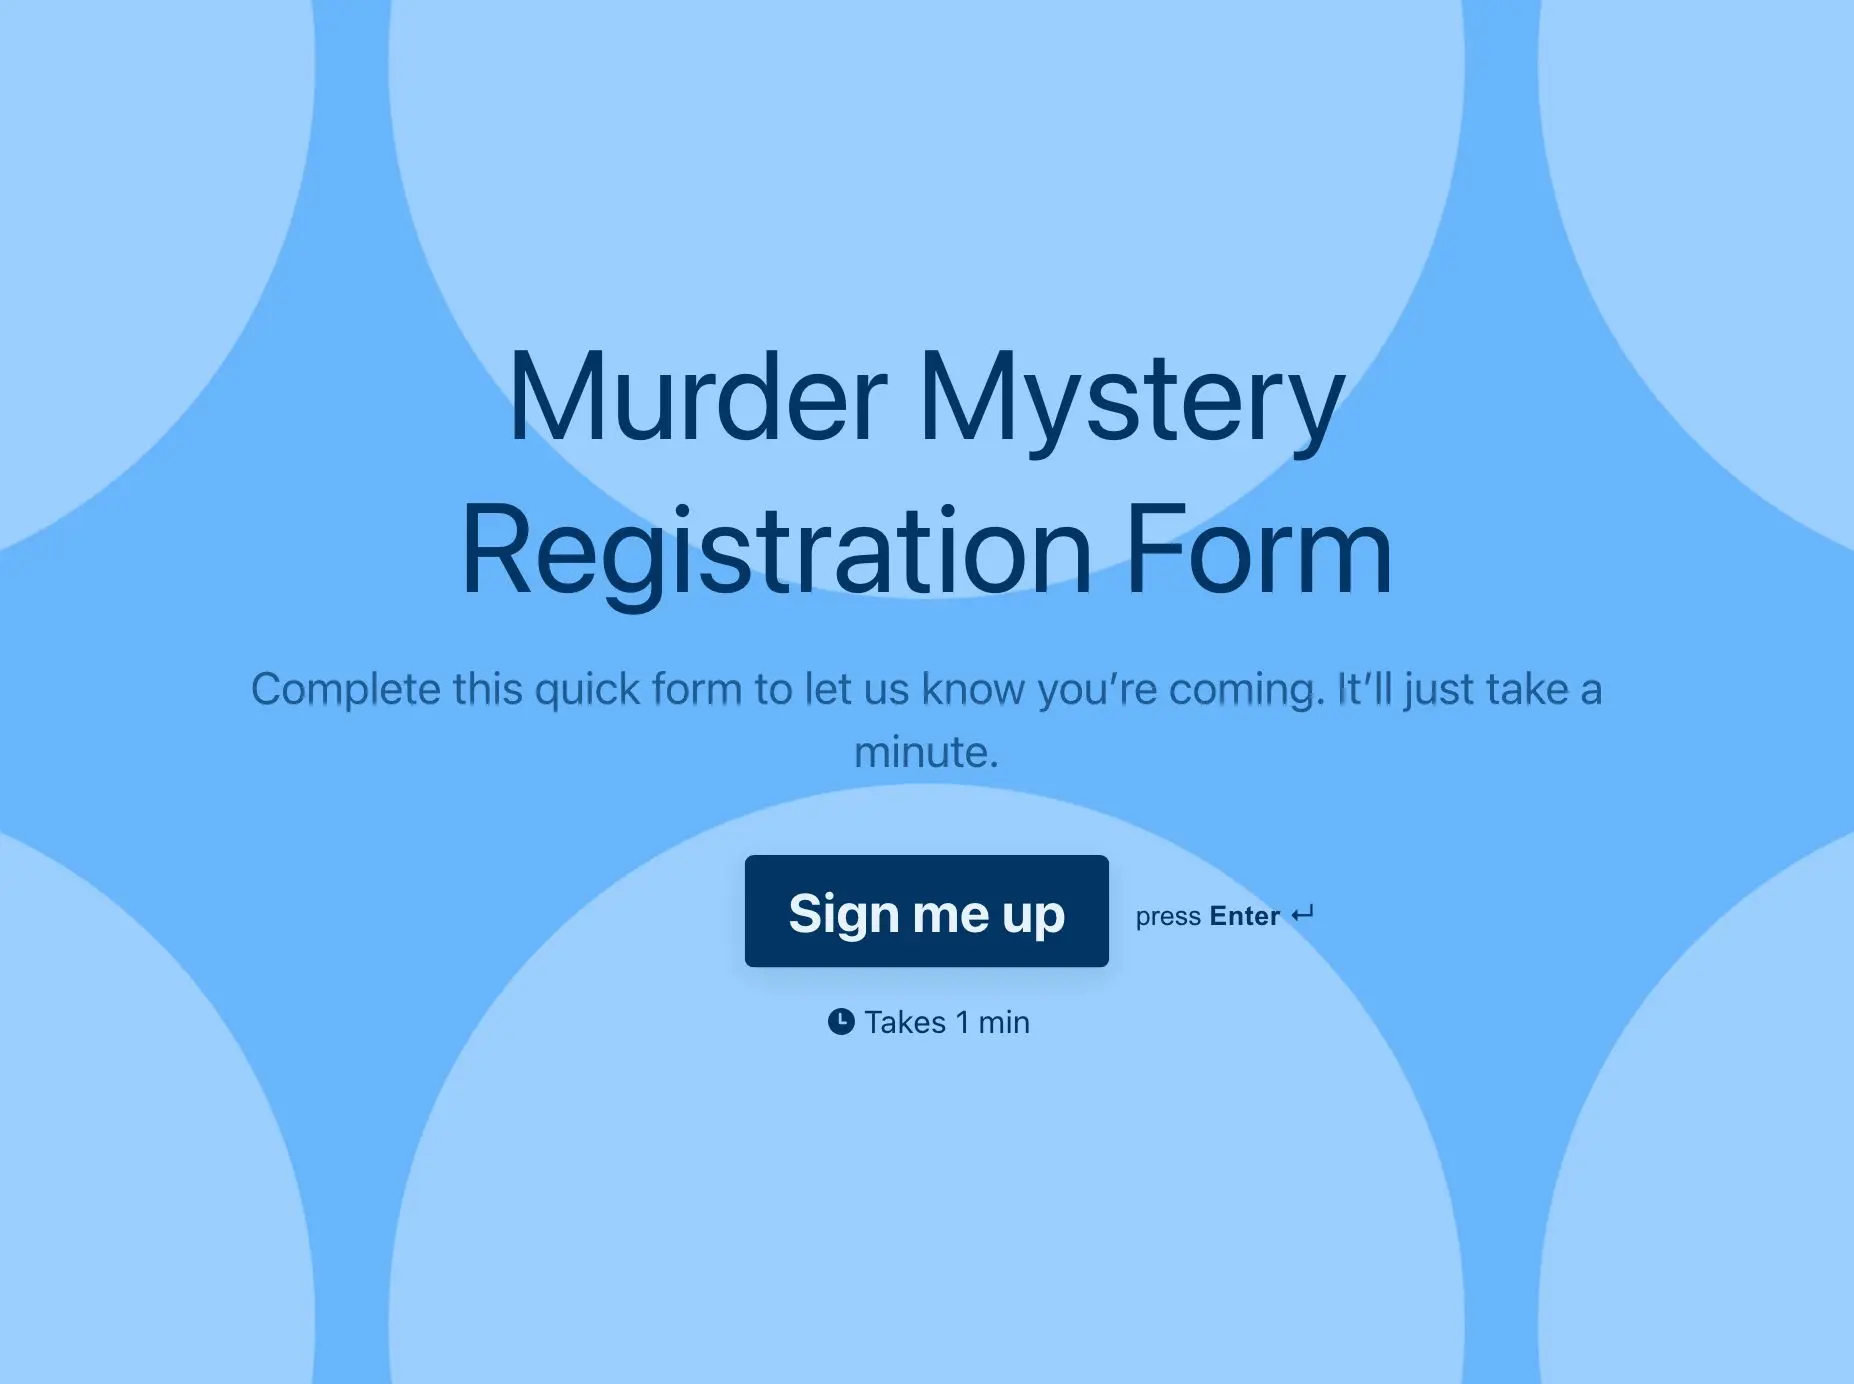 Murder Mystery Registration Form Template Hero